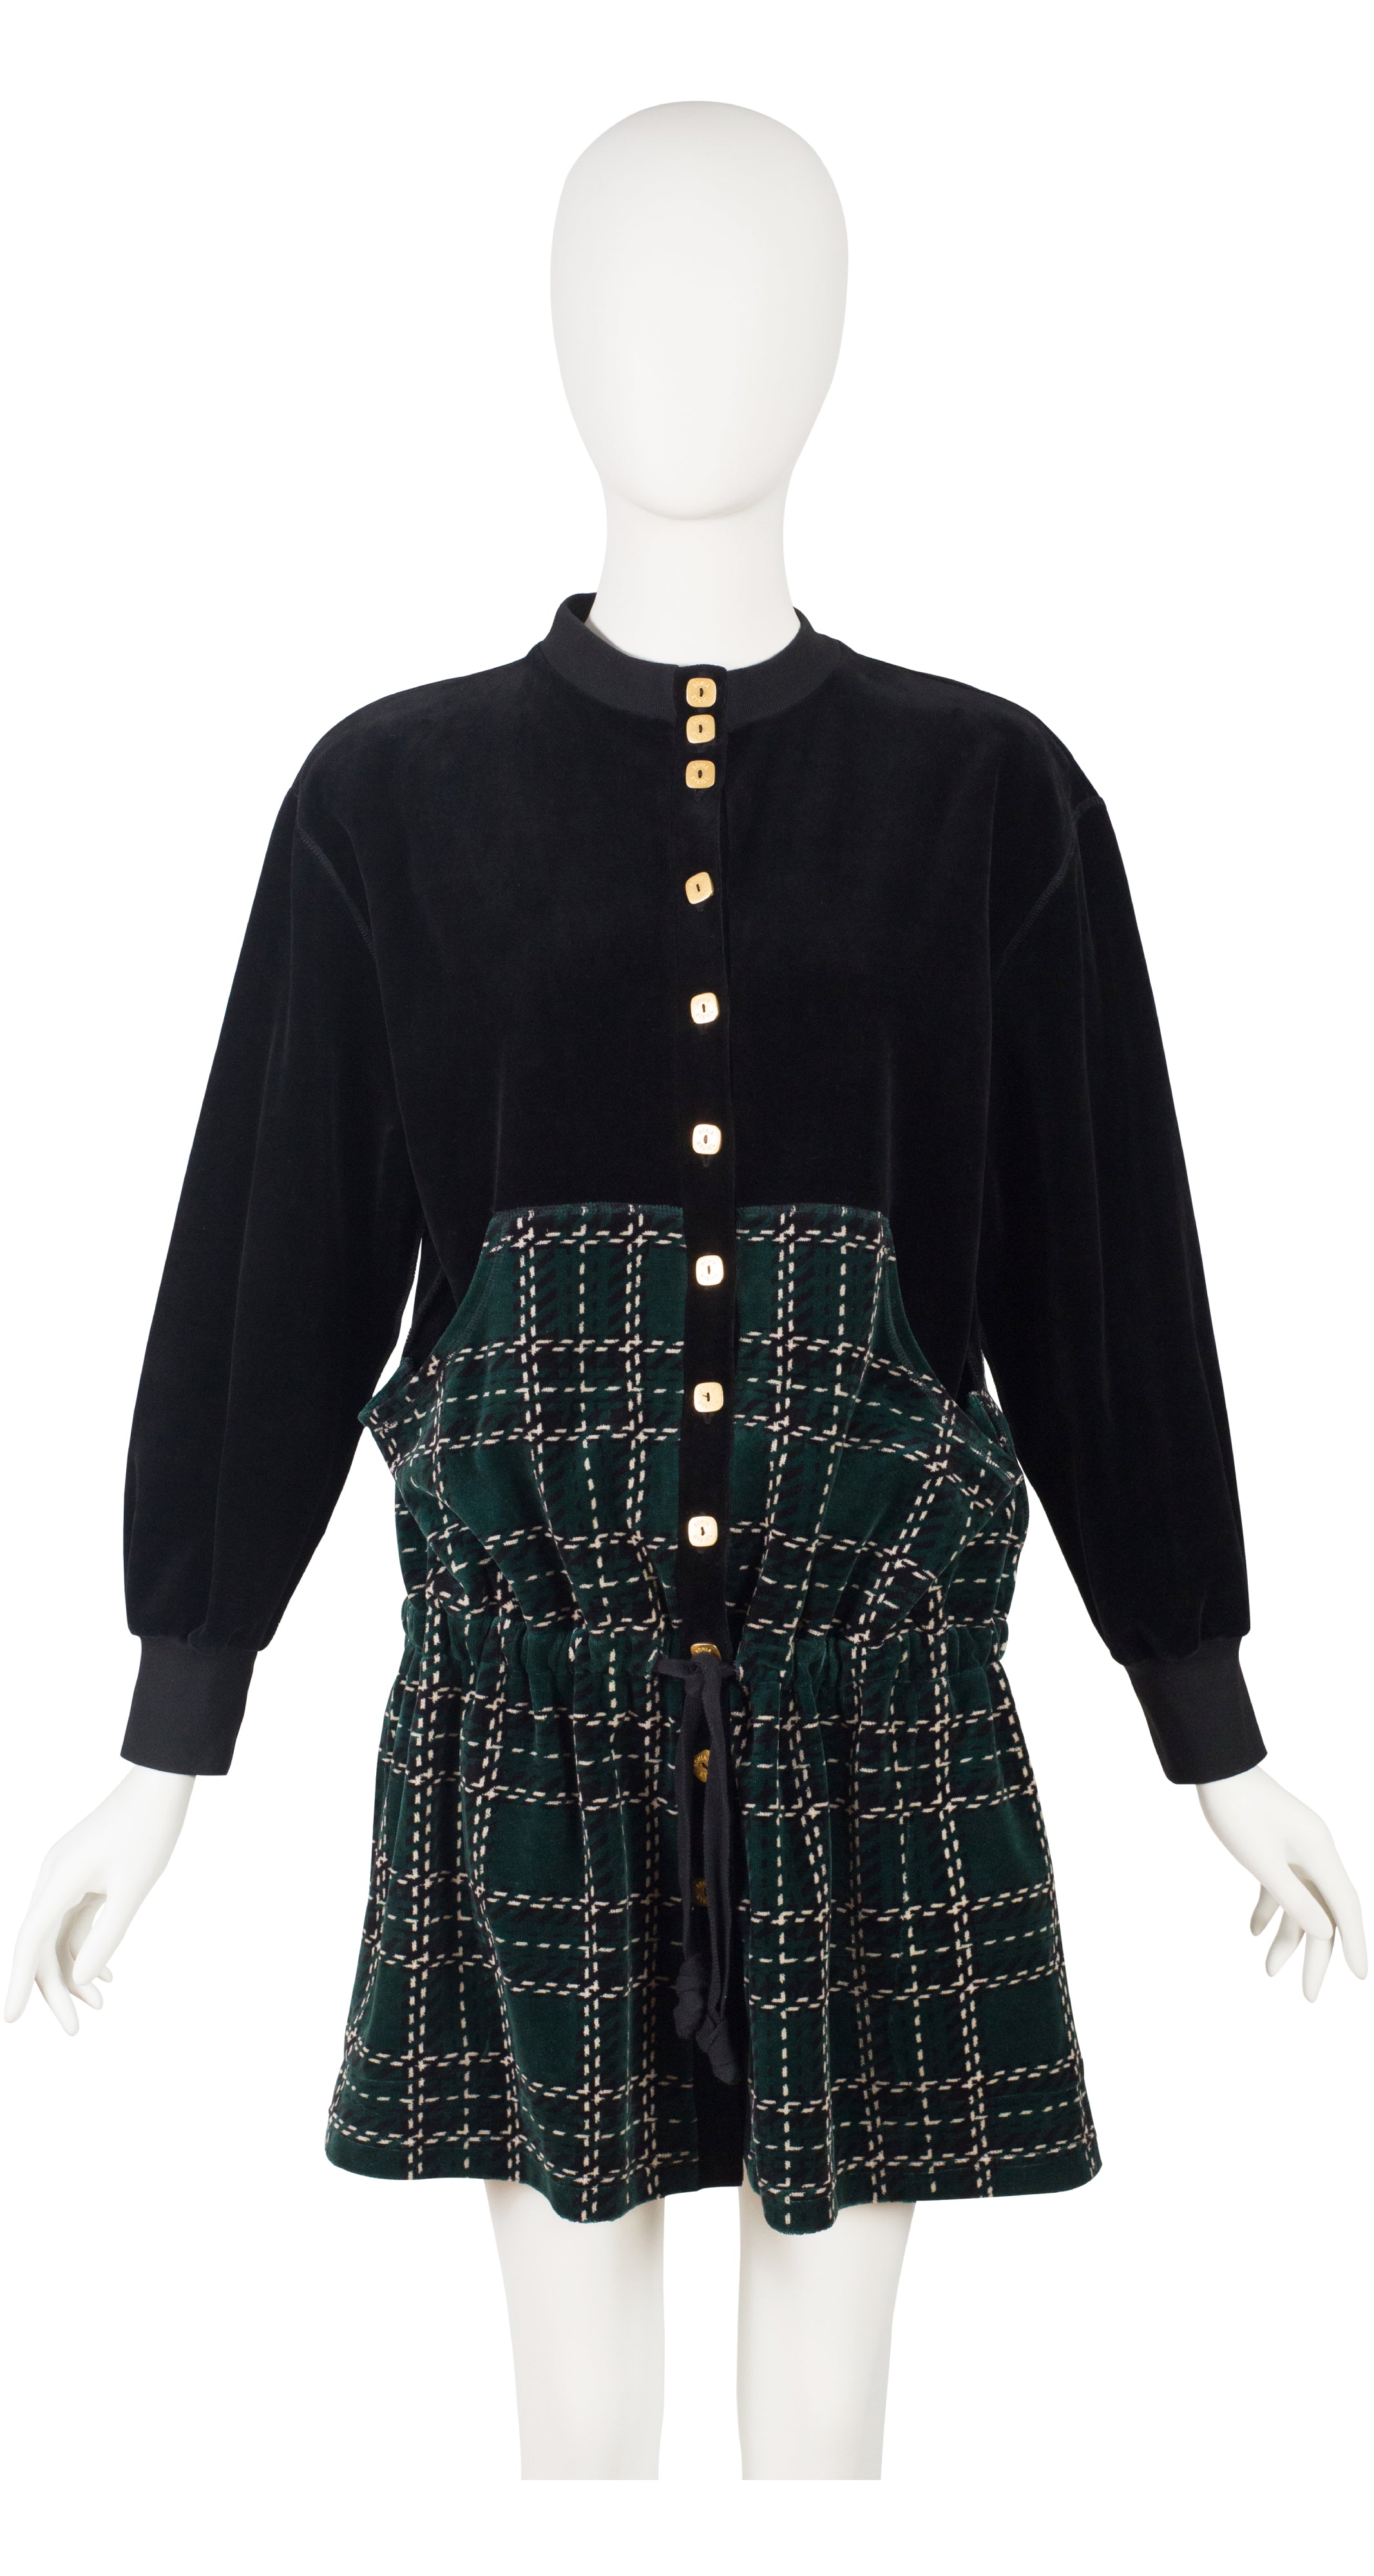 1990s Black & Plaid Cotton Velour Tunic Cardigan